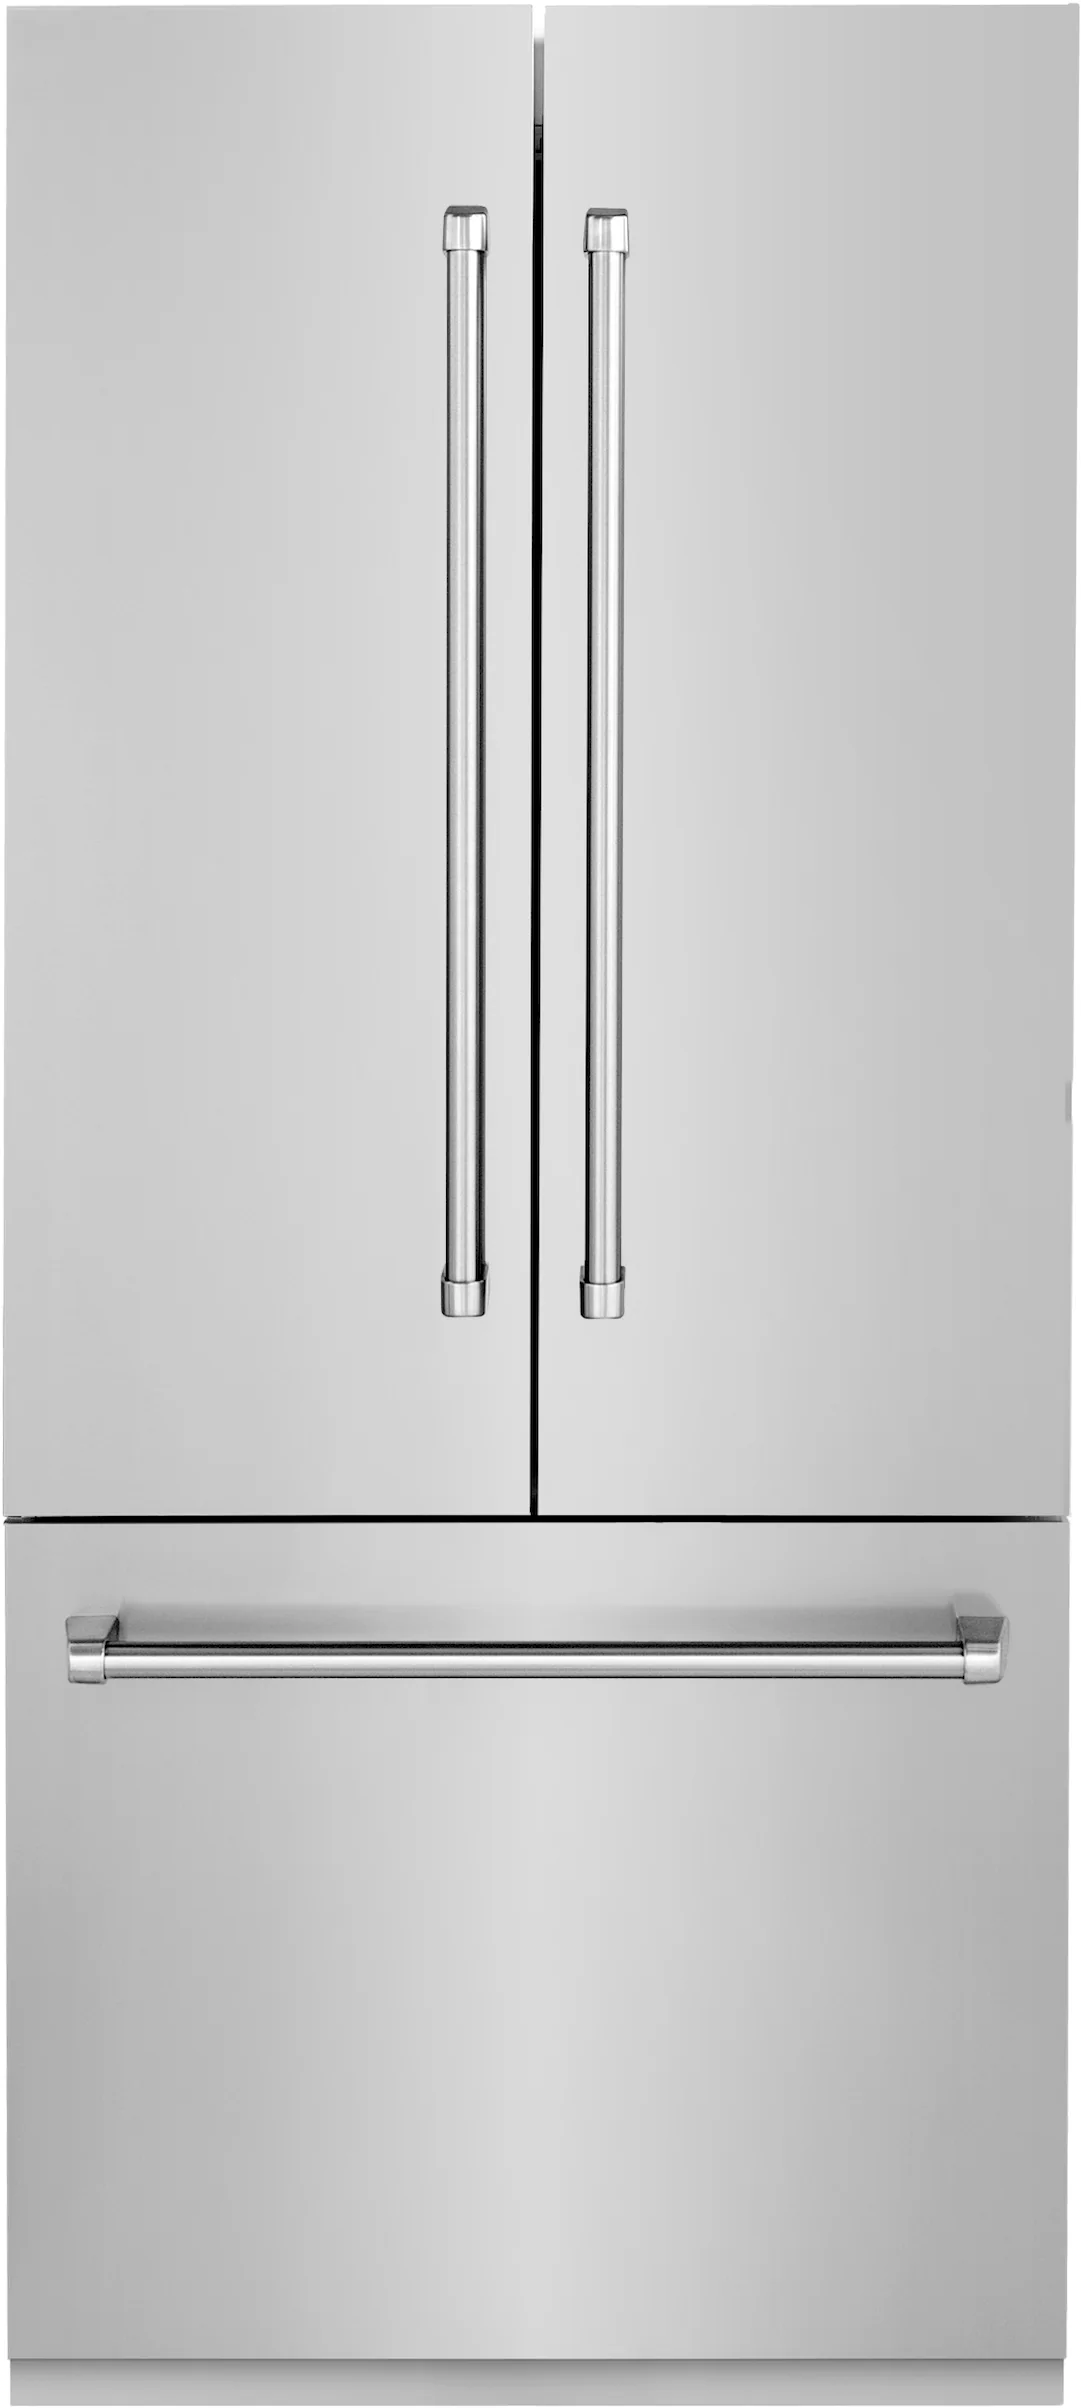 ZLINE 36 Inch 36"" Built In Counter Depth French Door Refrigerator RBIV30436 -  RBIV-304-36